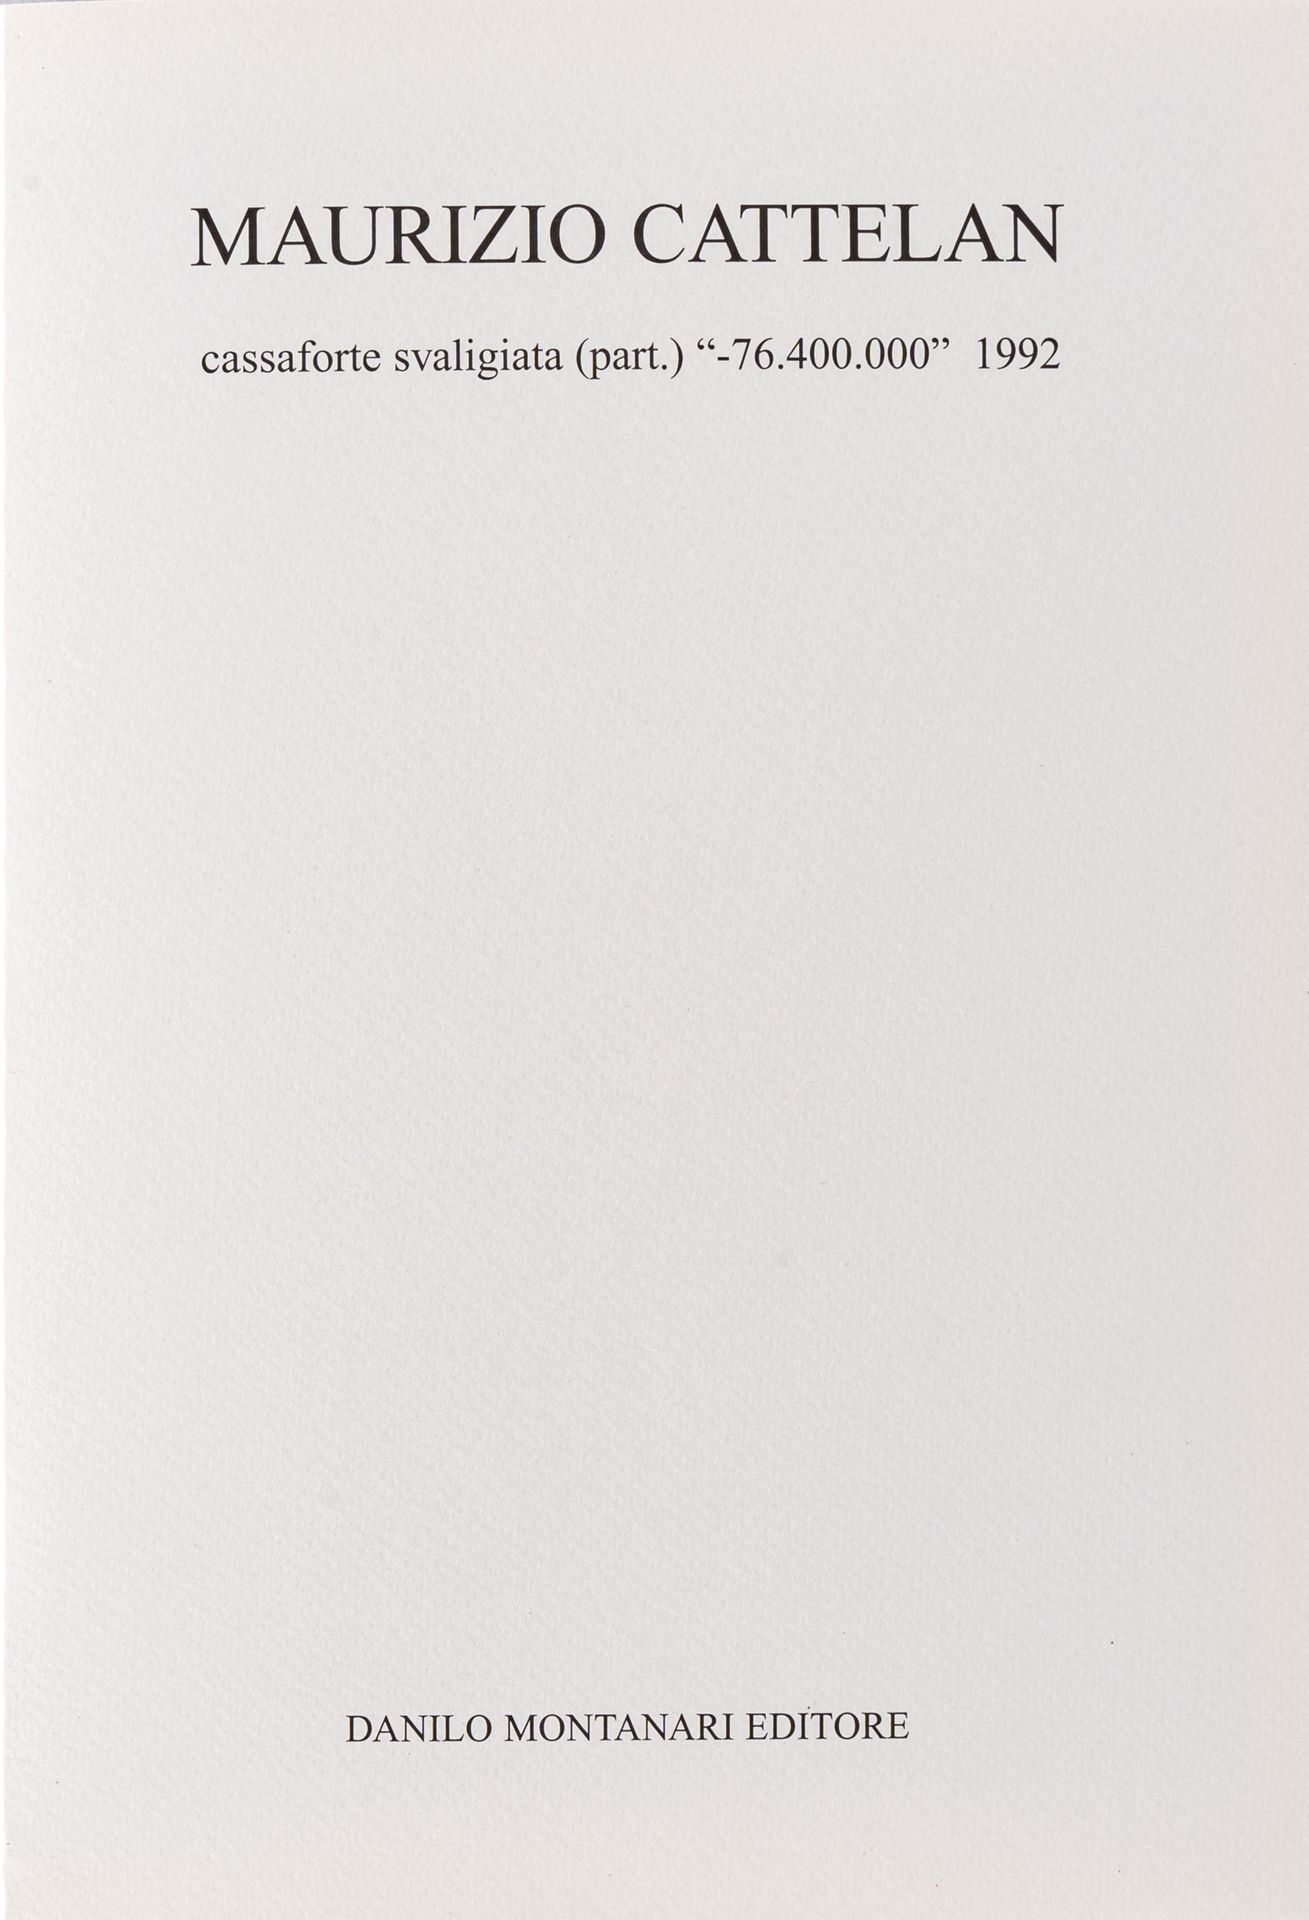 Maurizio Cattelan MAURIZIO CATTELAN

(1960)

-76.400.000 - Robo de caja fuerte (&hellip;